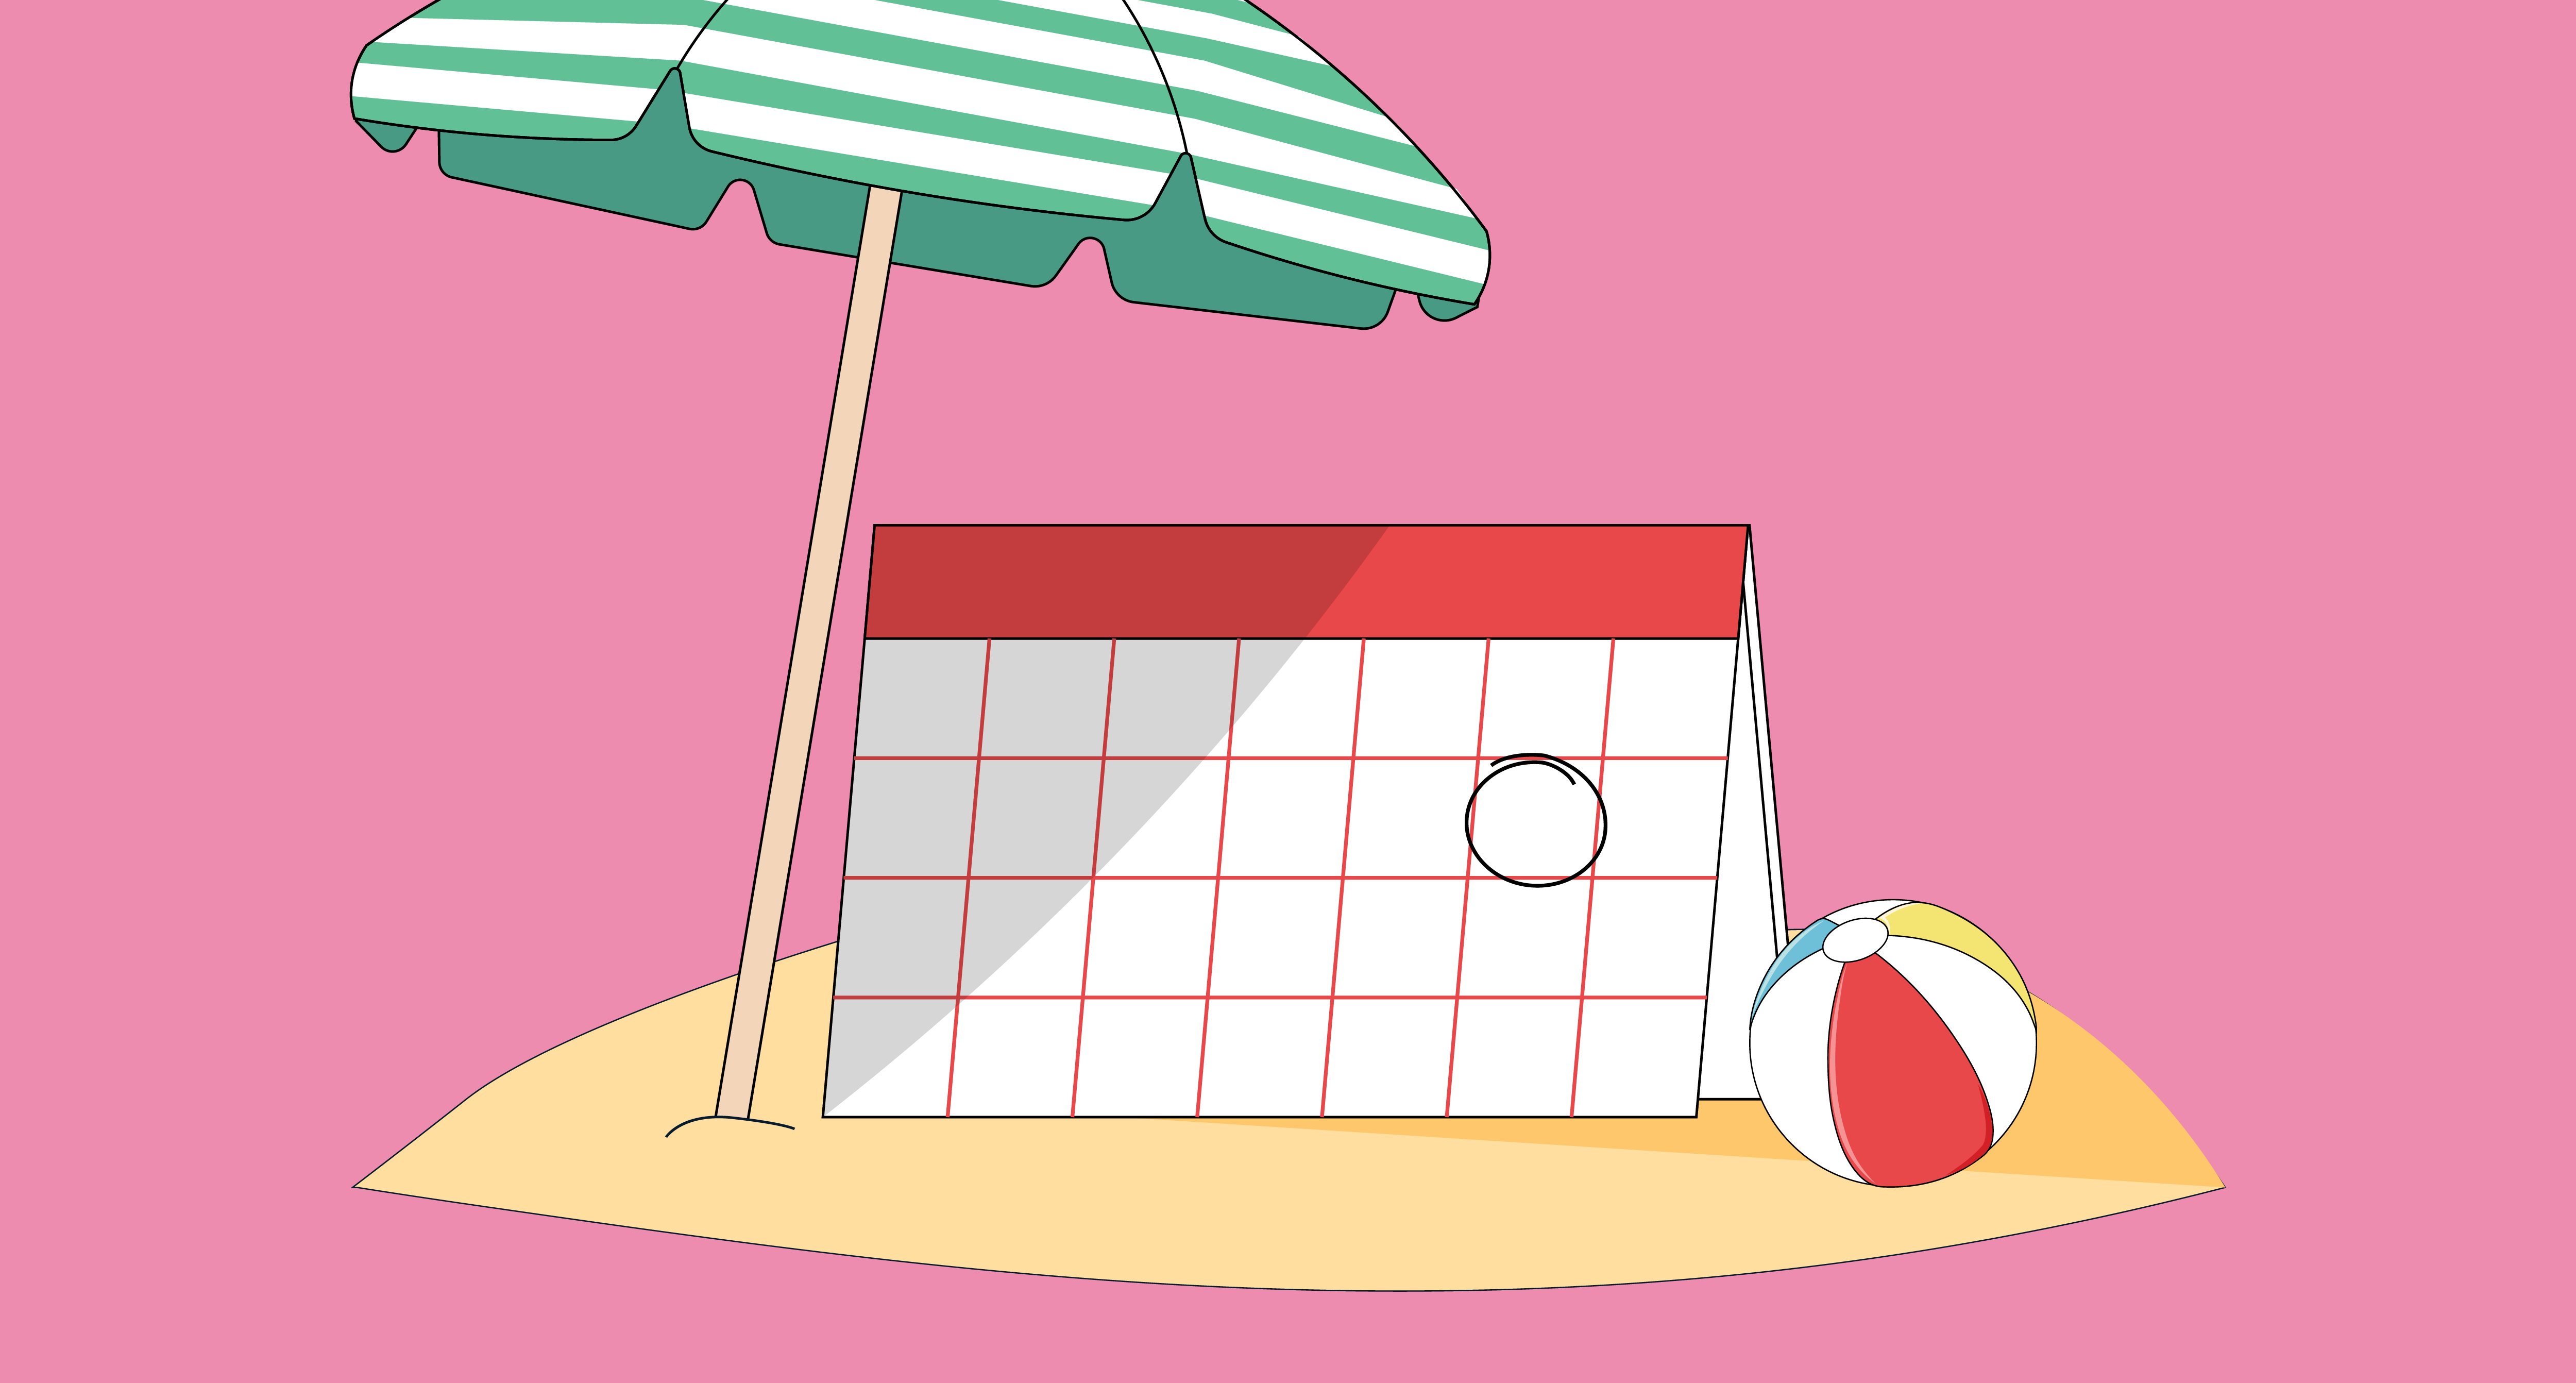 Calendar with Date circles on an island with a green striped beach umbrella and beach ball